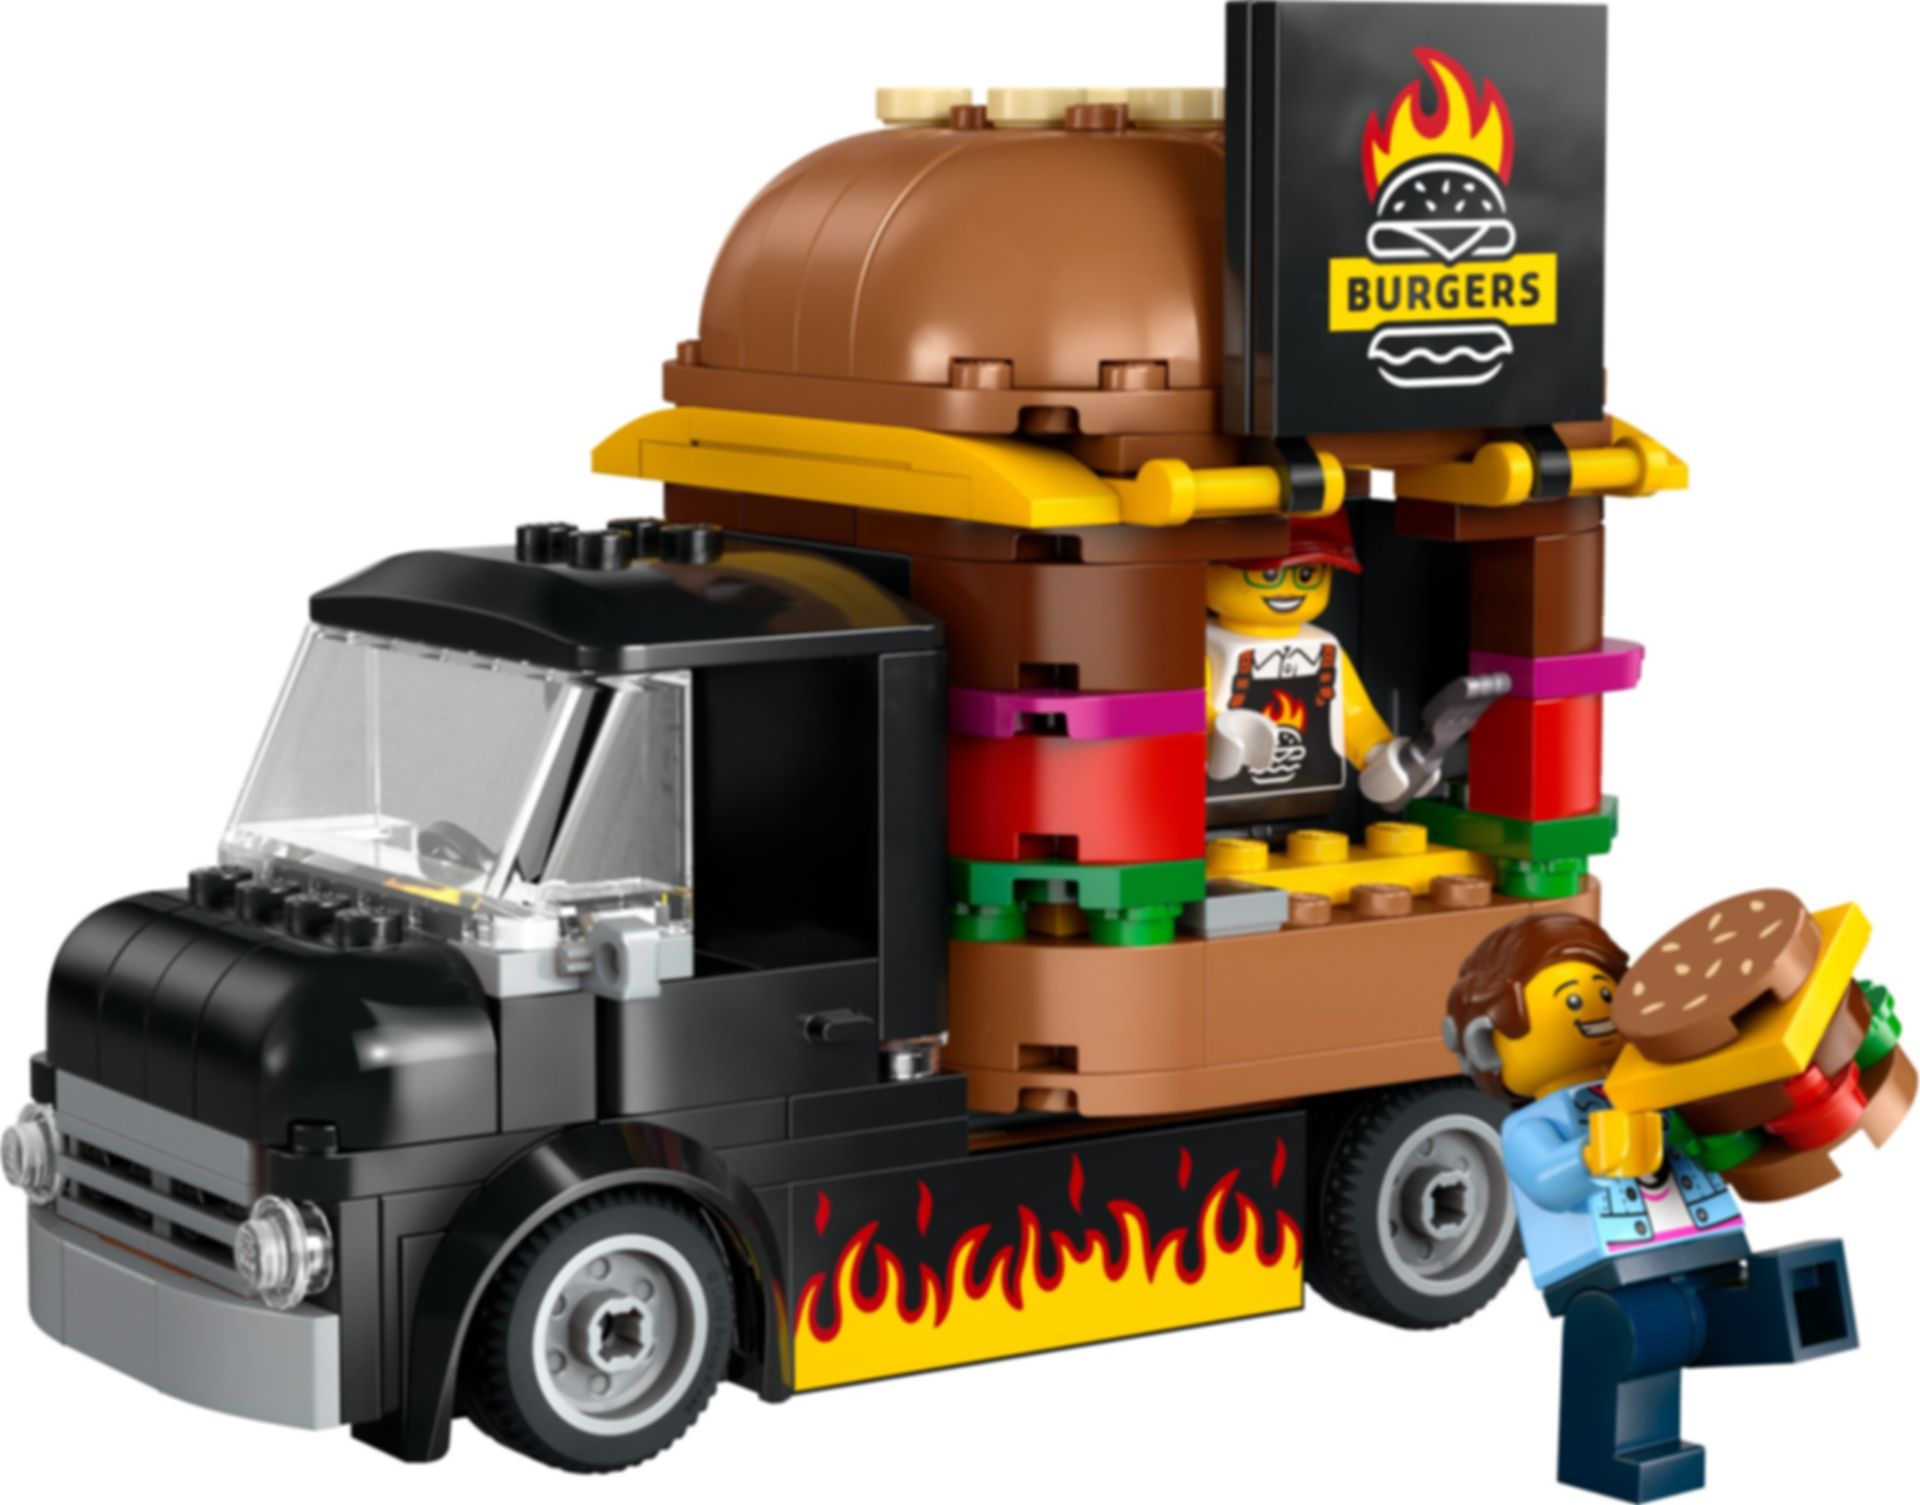 LEGO® City Le food-truck de burgers composants